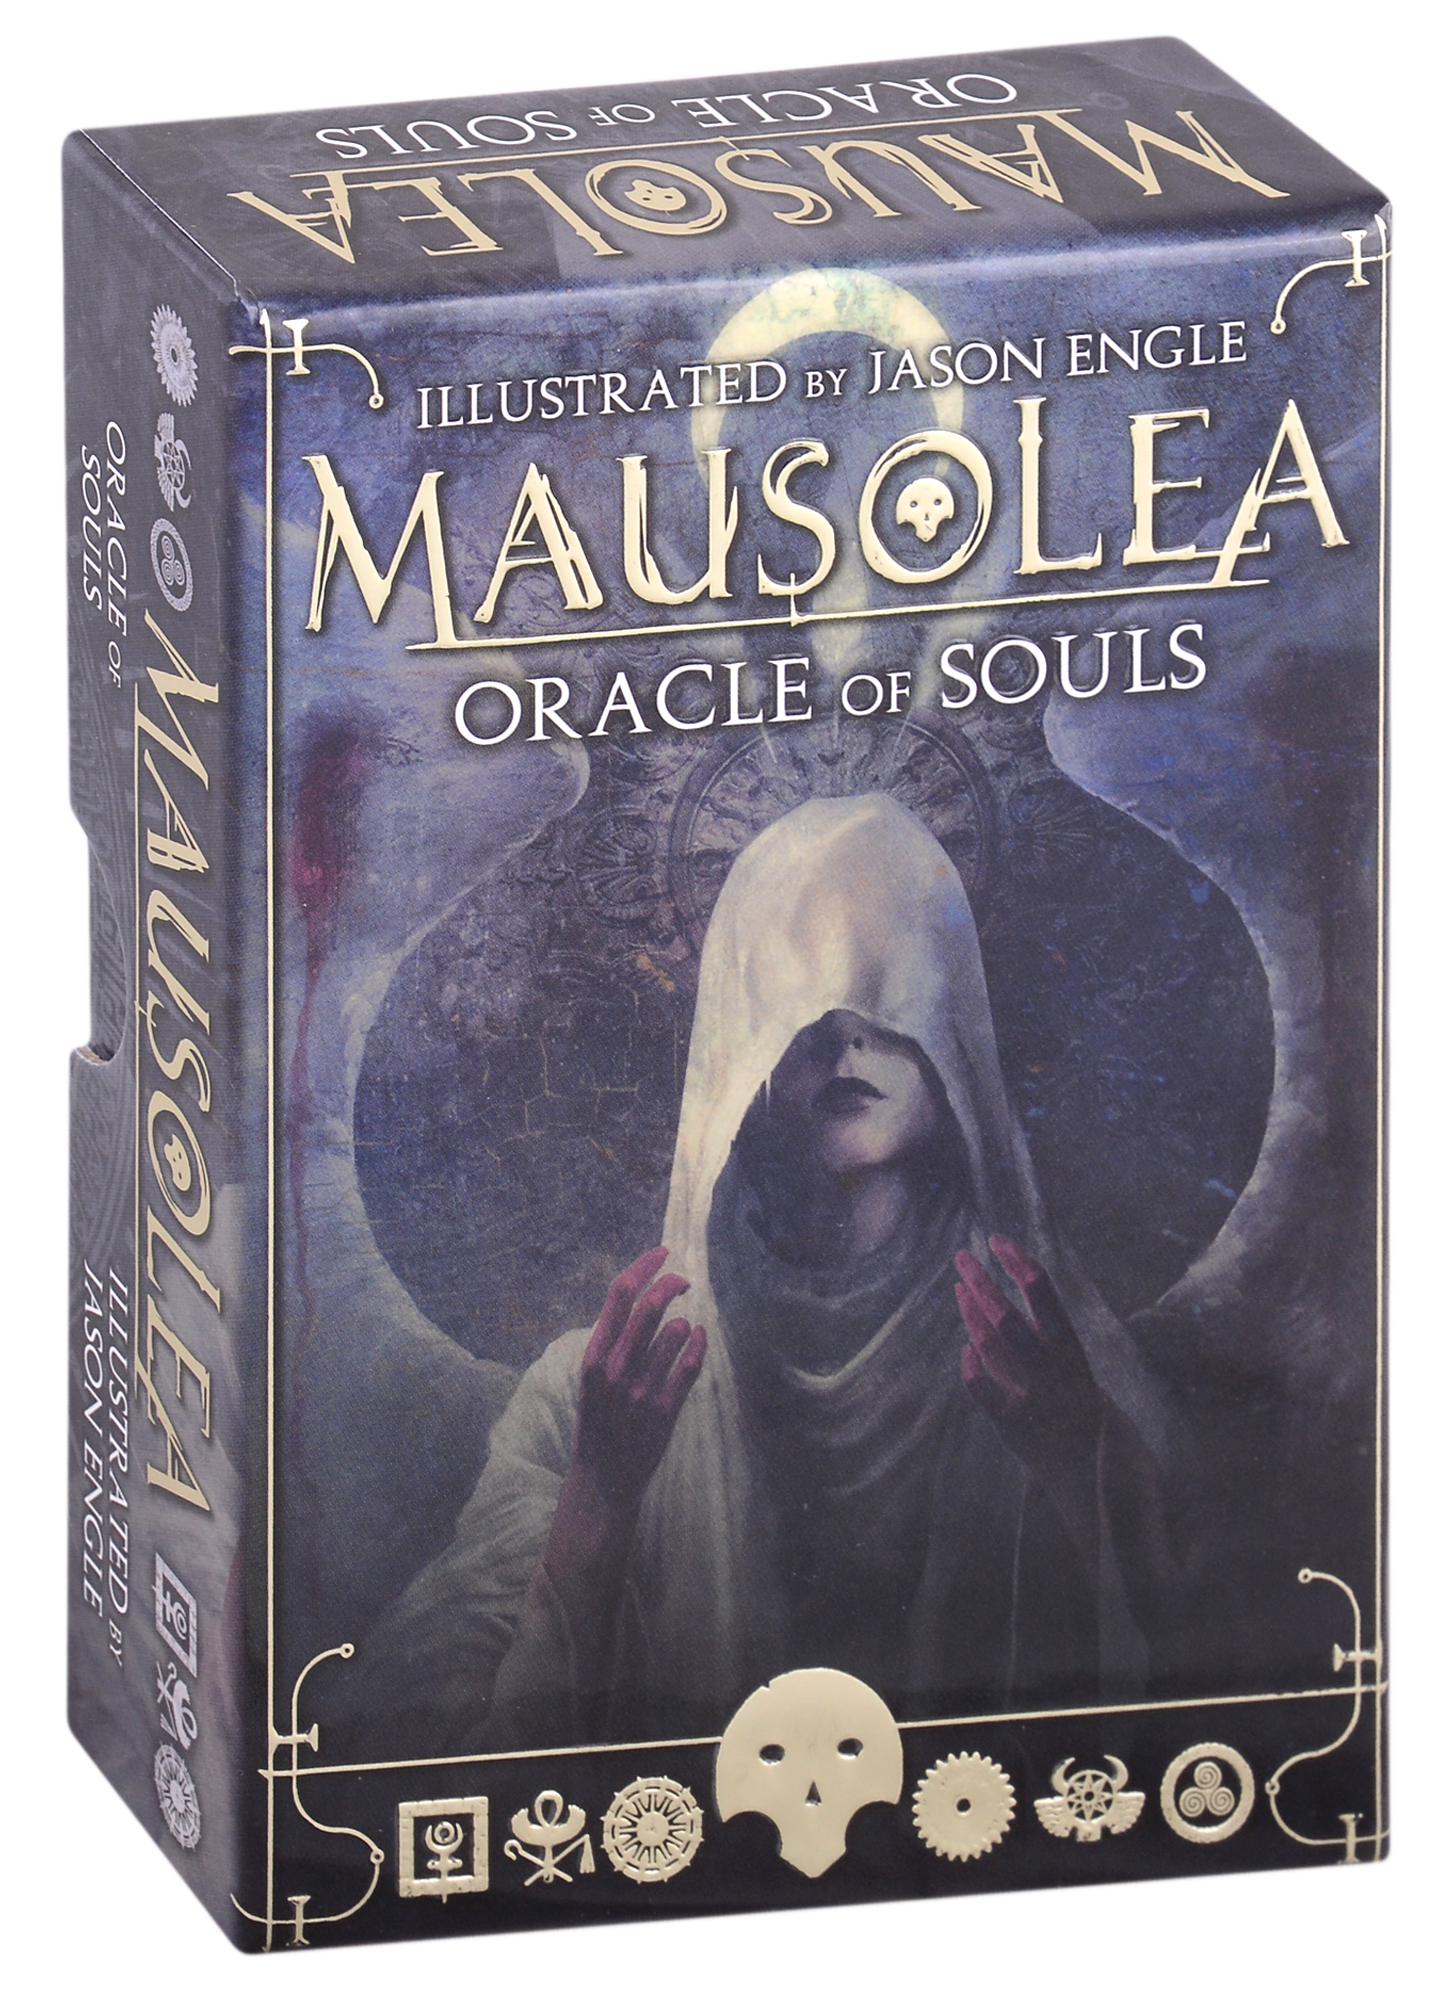 оракул мистических моментов oracle of mystical moments Mausolea. Oracle of Souls (Book & 36 Oracle Cards)